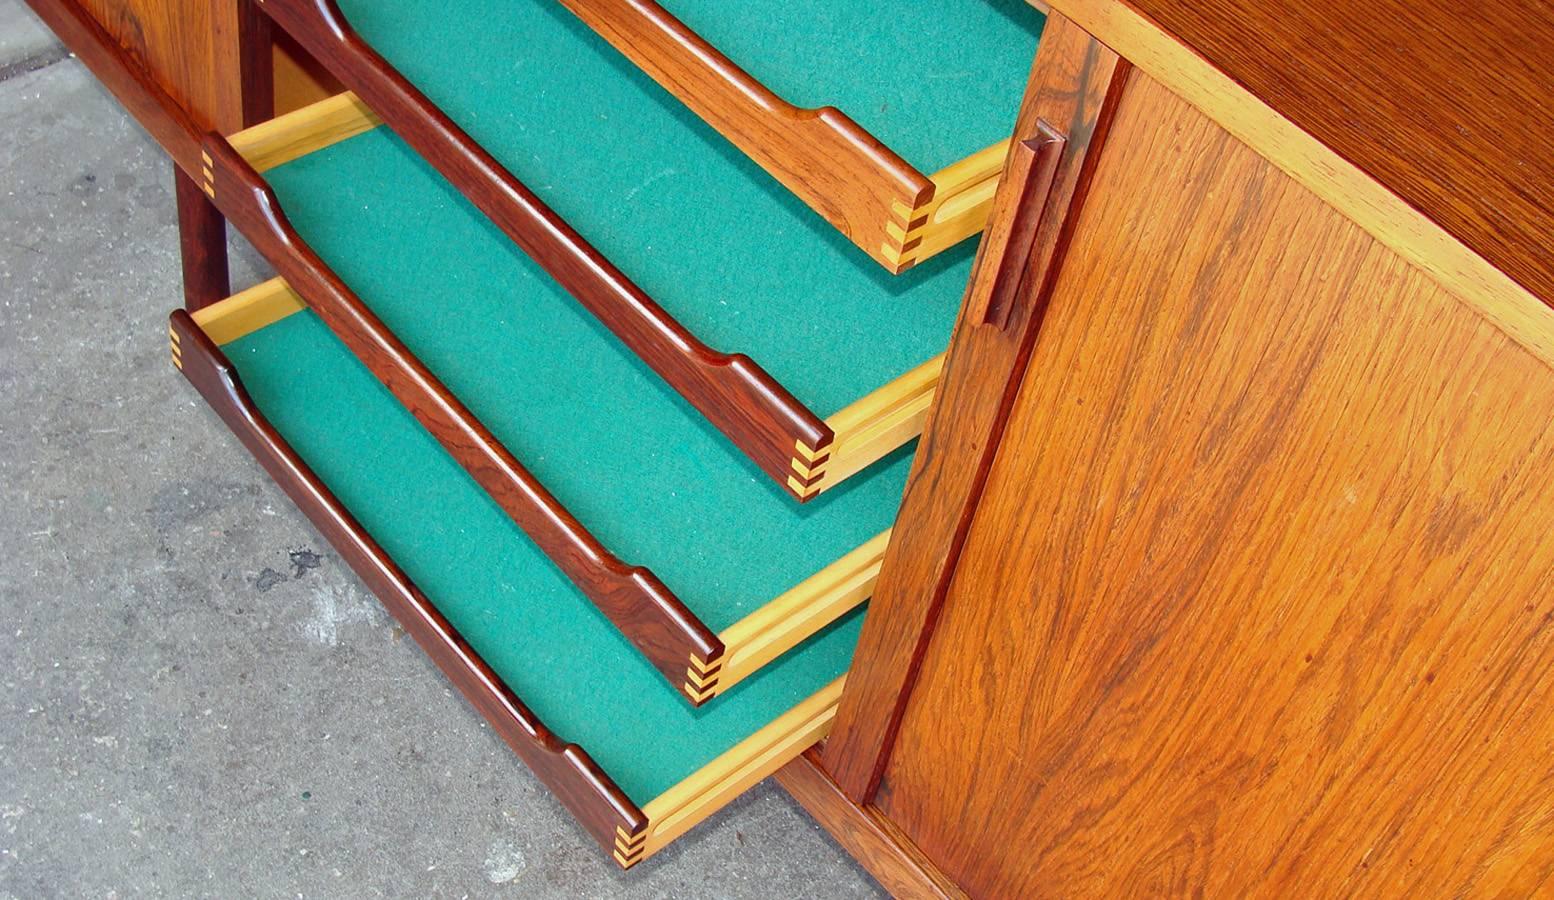 Superb Ib Kofod-Larsen Sideboard in Rosewood In Excellent Condition For Sale In Lambertville, NJ